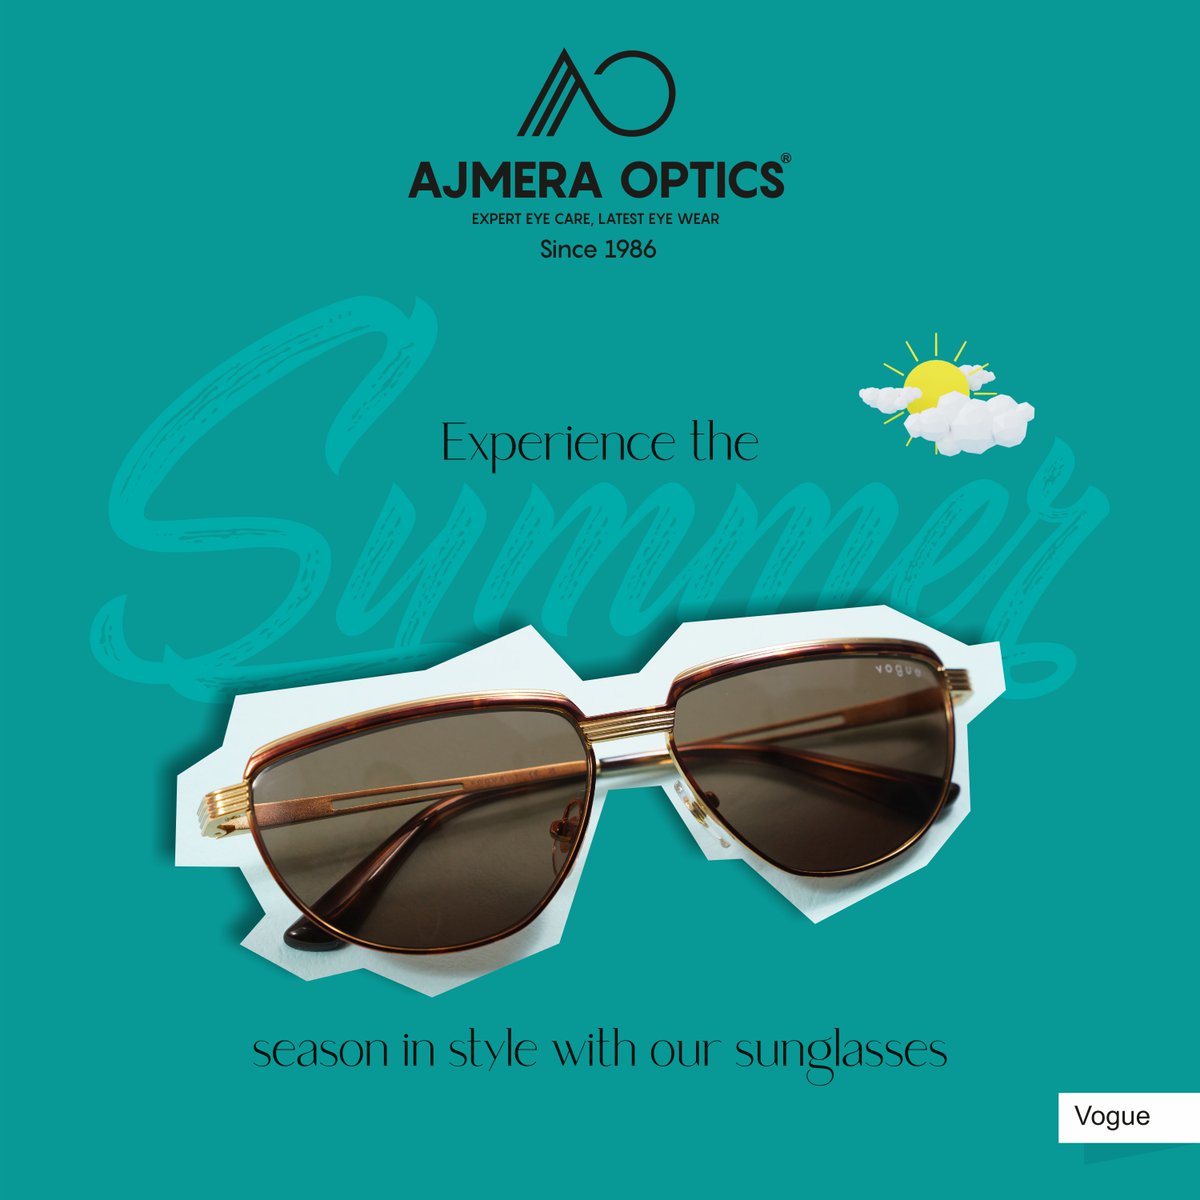 Keep an eye 👁 on our latest summer trends!
Visit our store for your perfect pair of sunglasses.
#AjmeraOptics @ Maninagar
@vogueeyewear
.
🌐 ajmeraoptics.com
.
.
#summerfashion #cool #FestiveFeeling #EyewearLove #ContactLens #AjmeraOptics #Optics #Optician #trendinglooks